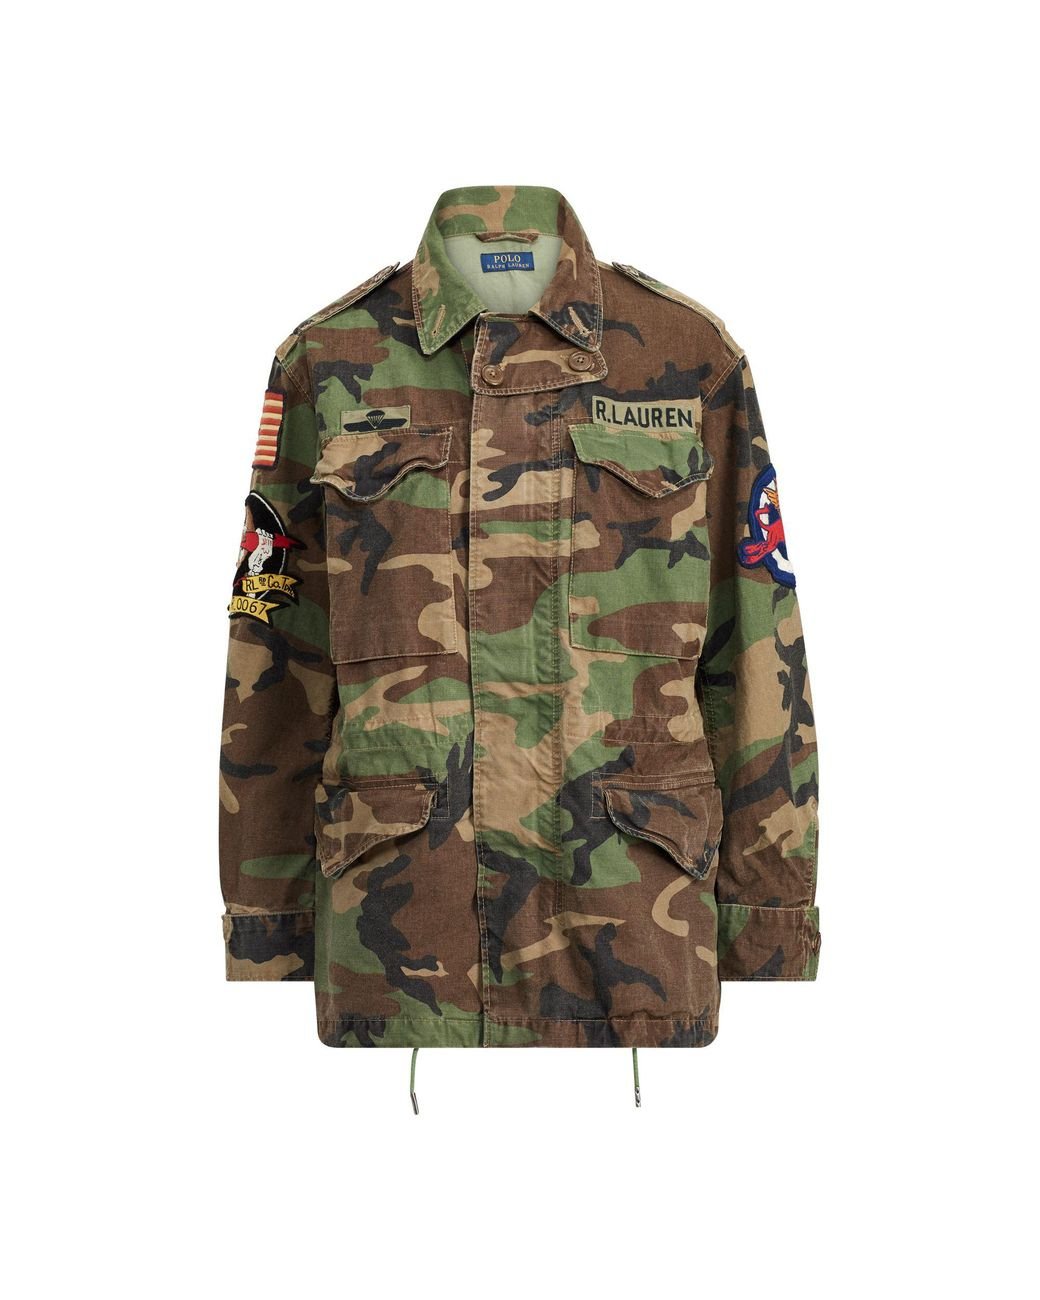 Polo Ralph Lauren Camo Military Combat Jacket in Green | Lyst